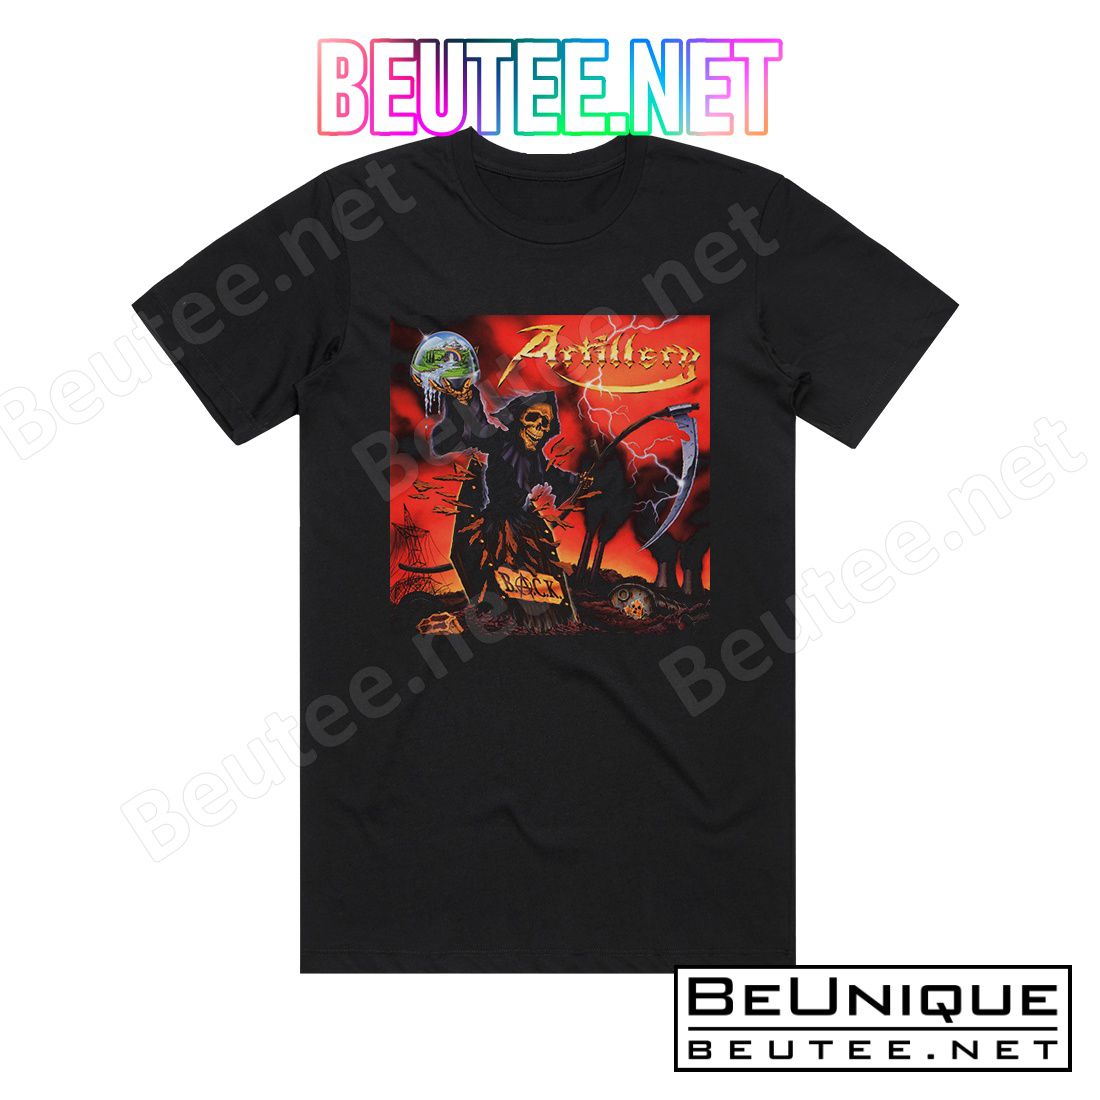 Artillery Back Album Cover T-Shirt